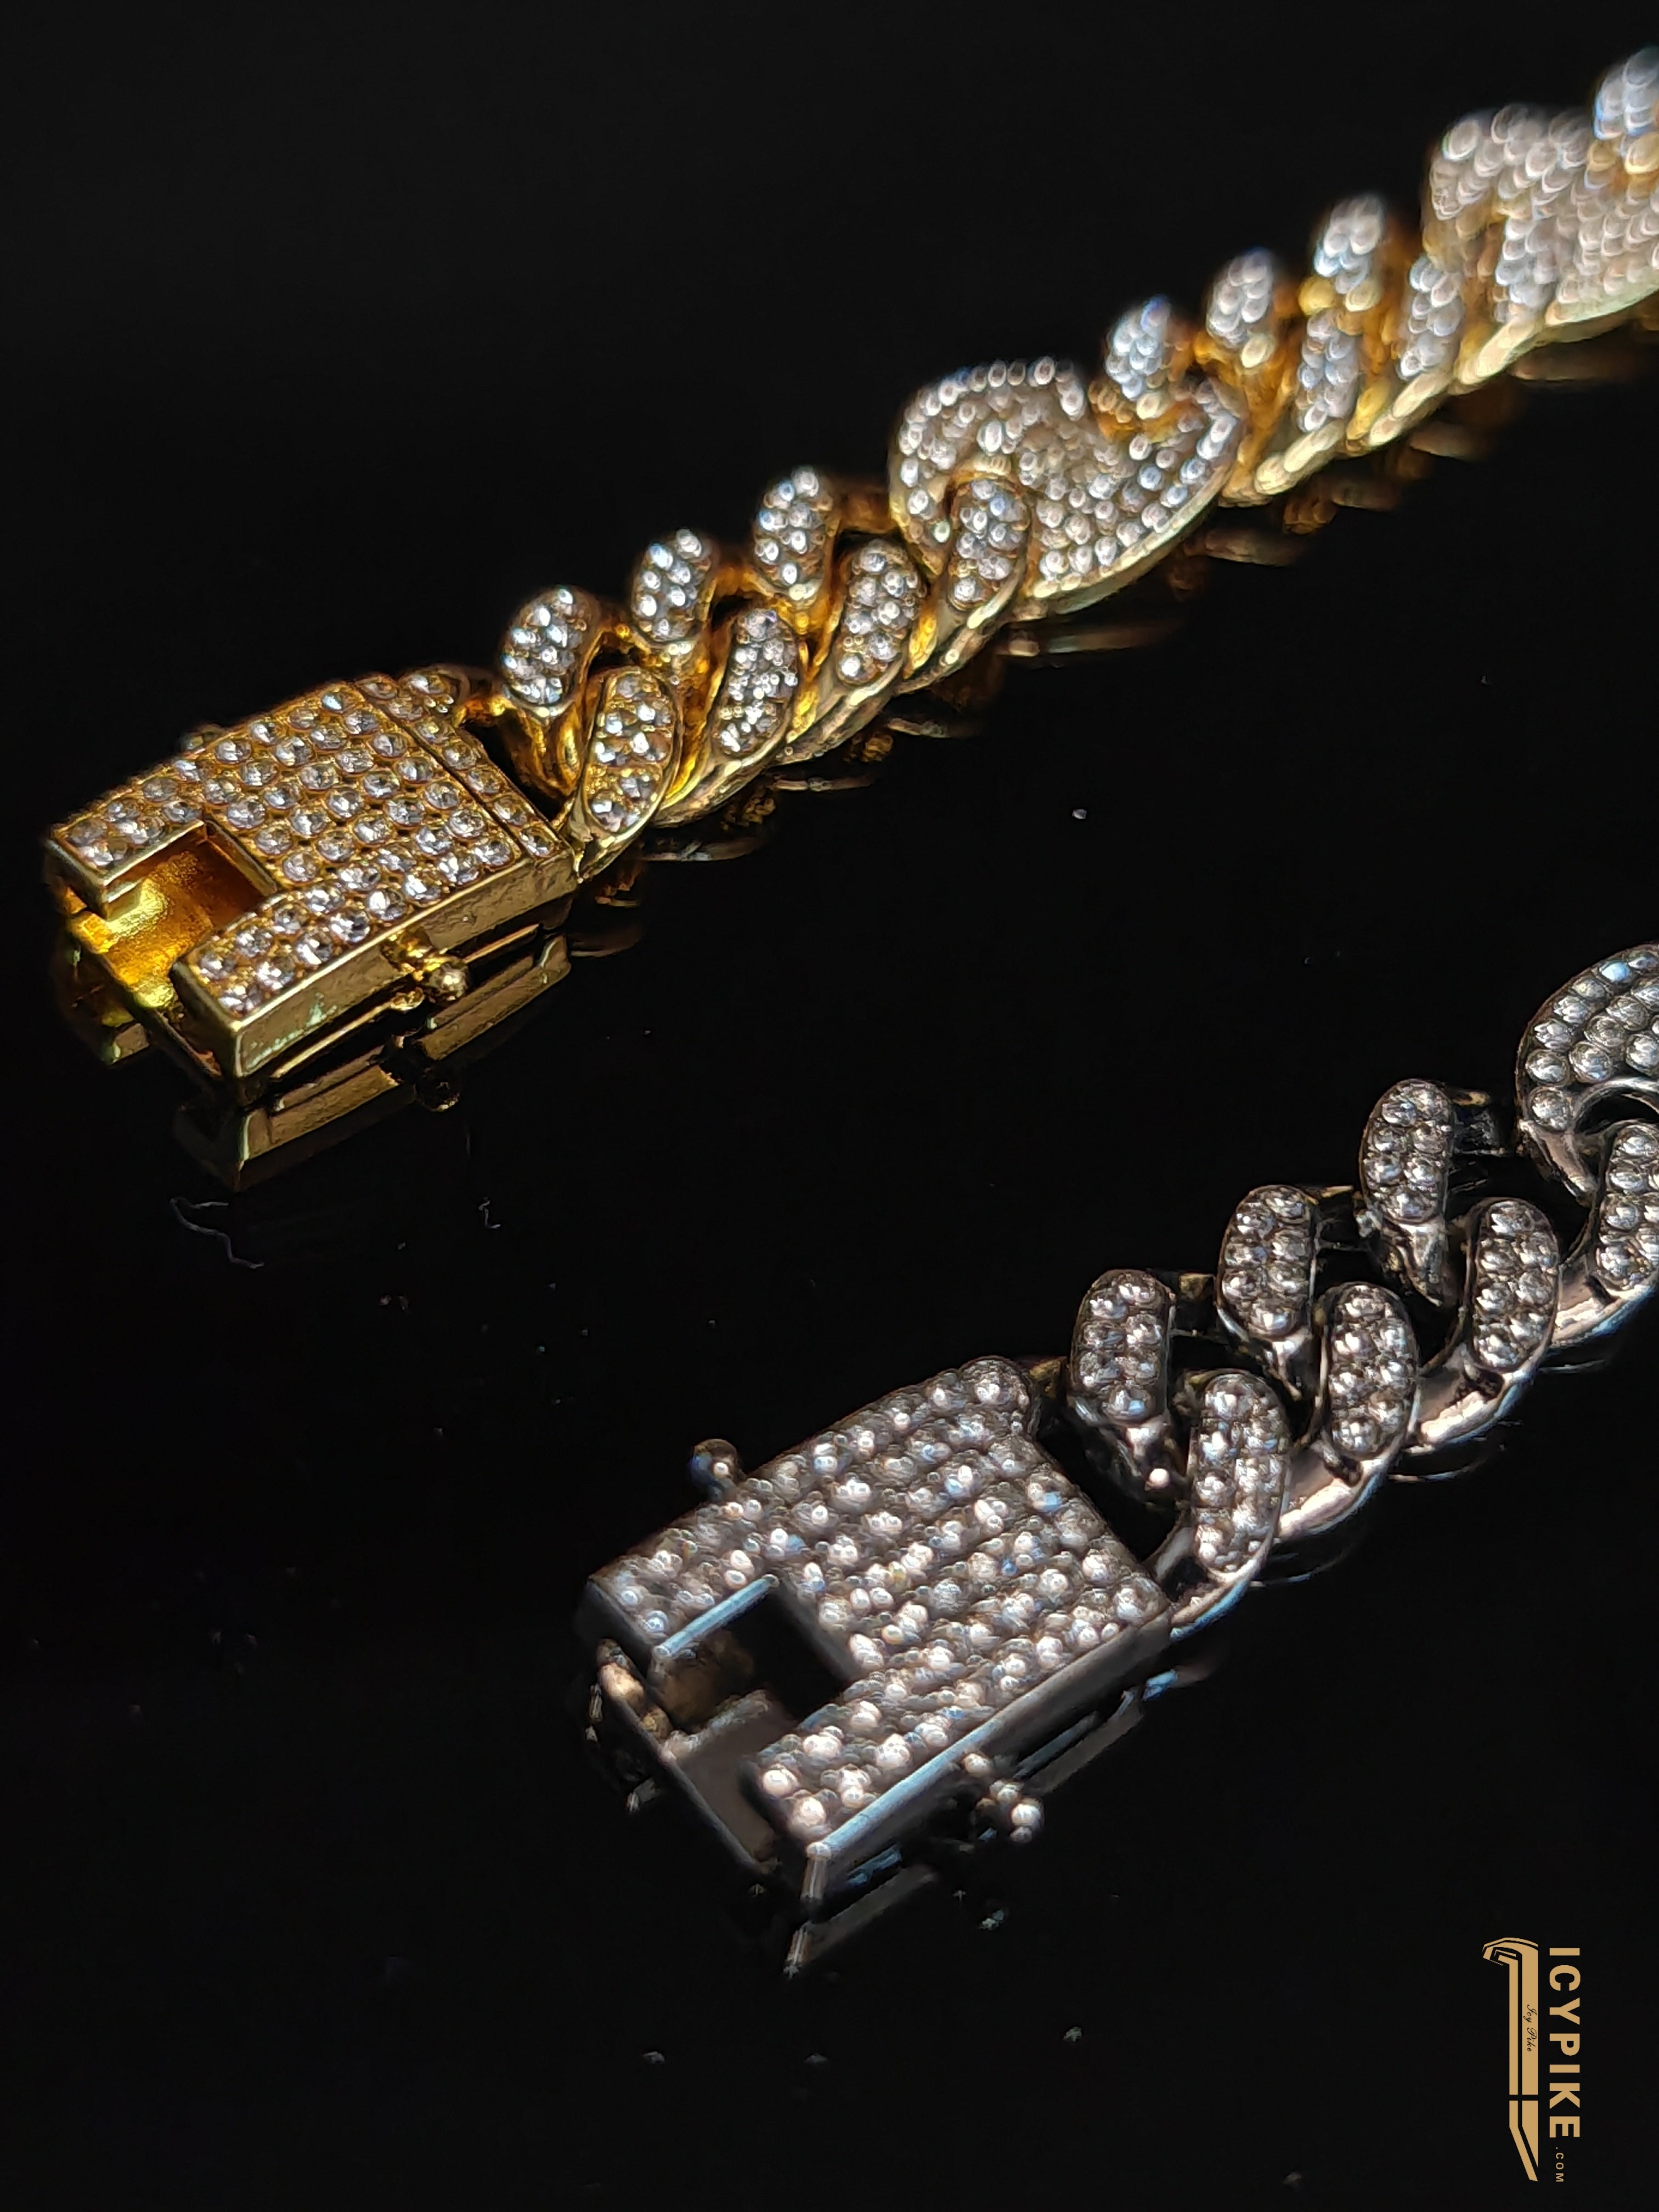 12mm Gold Plated Cuban Link Bracelet - {{ cuban link}} Bracelet